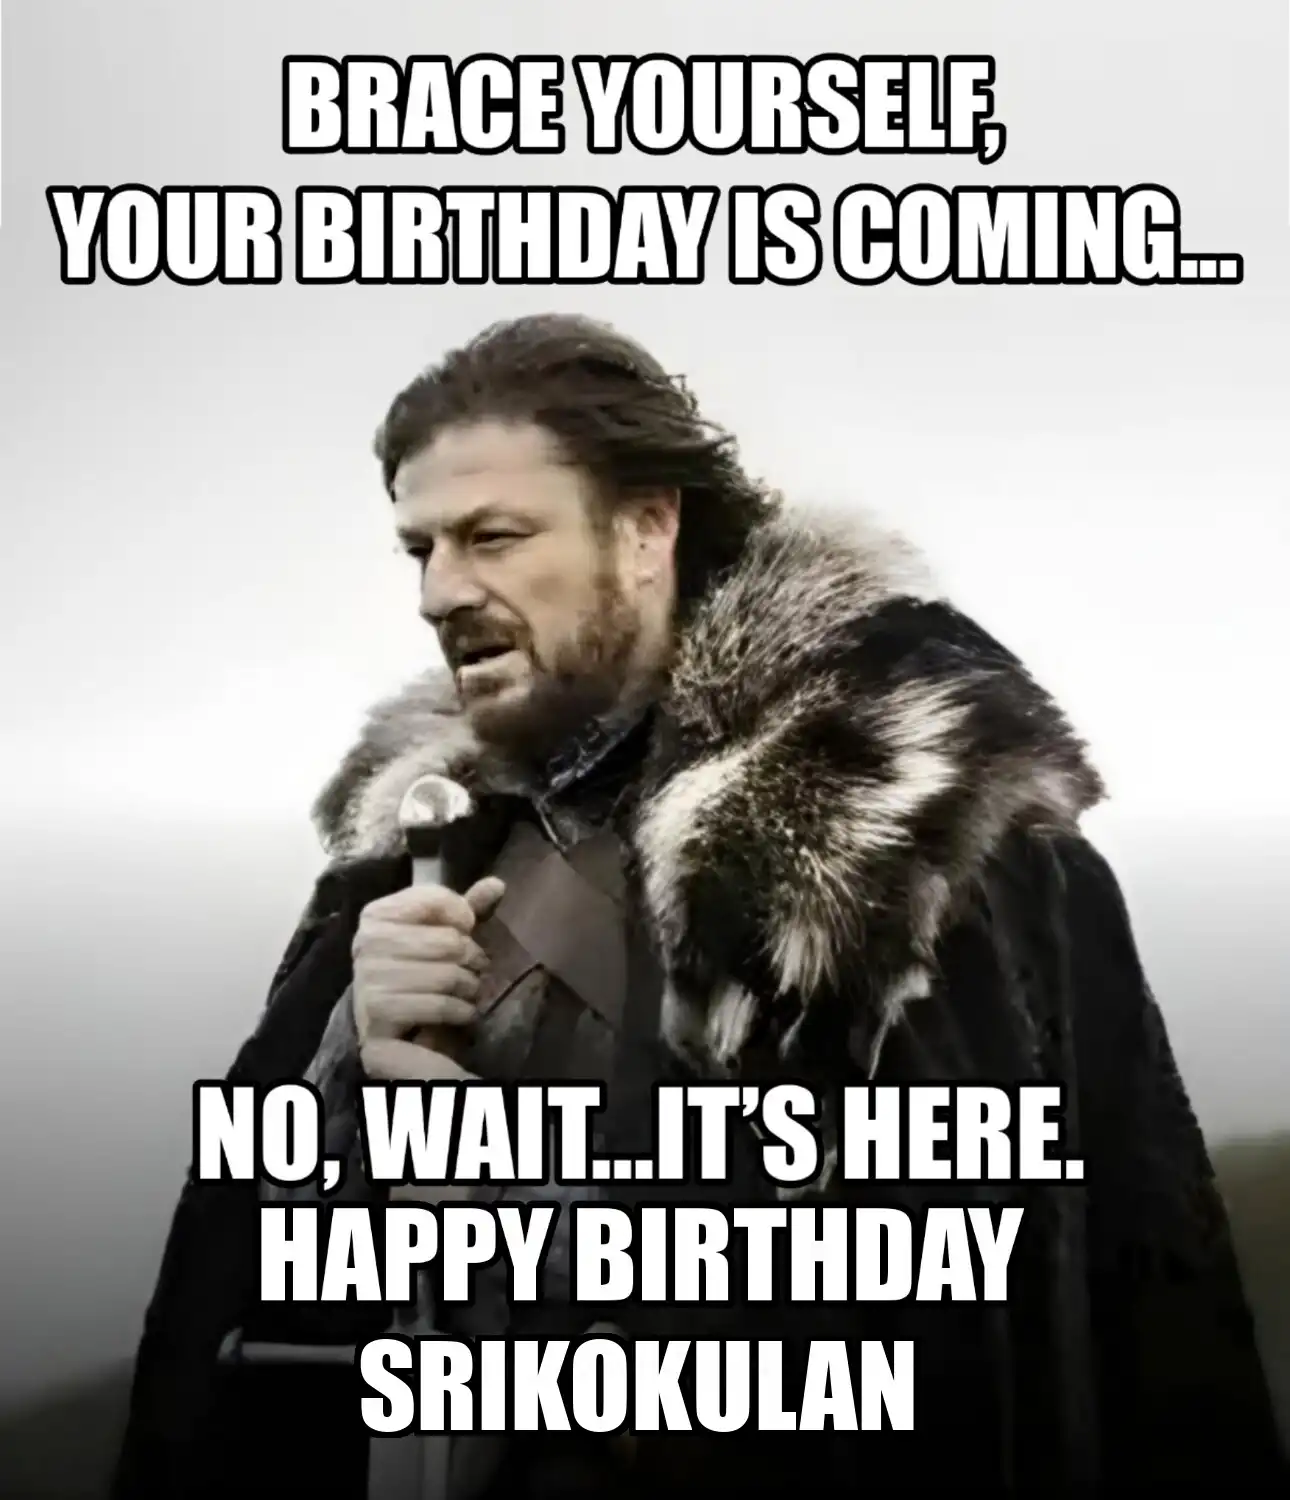 Happy Birthday Srikokulan Brace Yourself Your Birthday Is Coming Meme